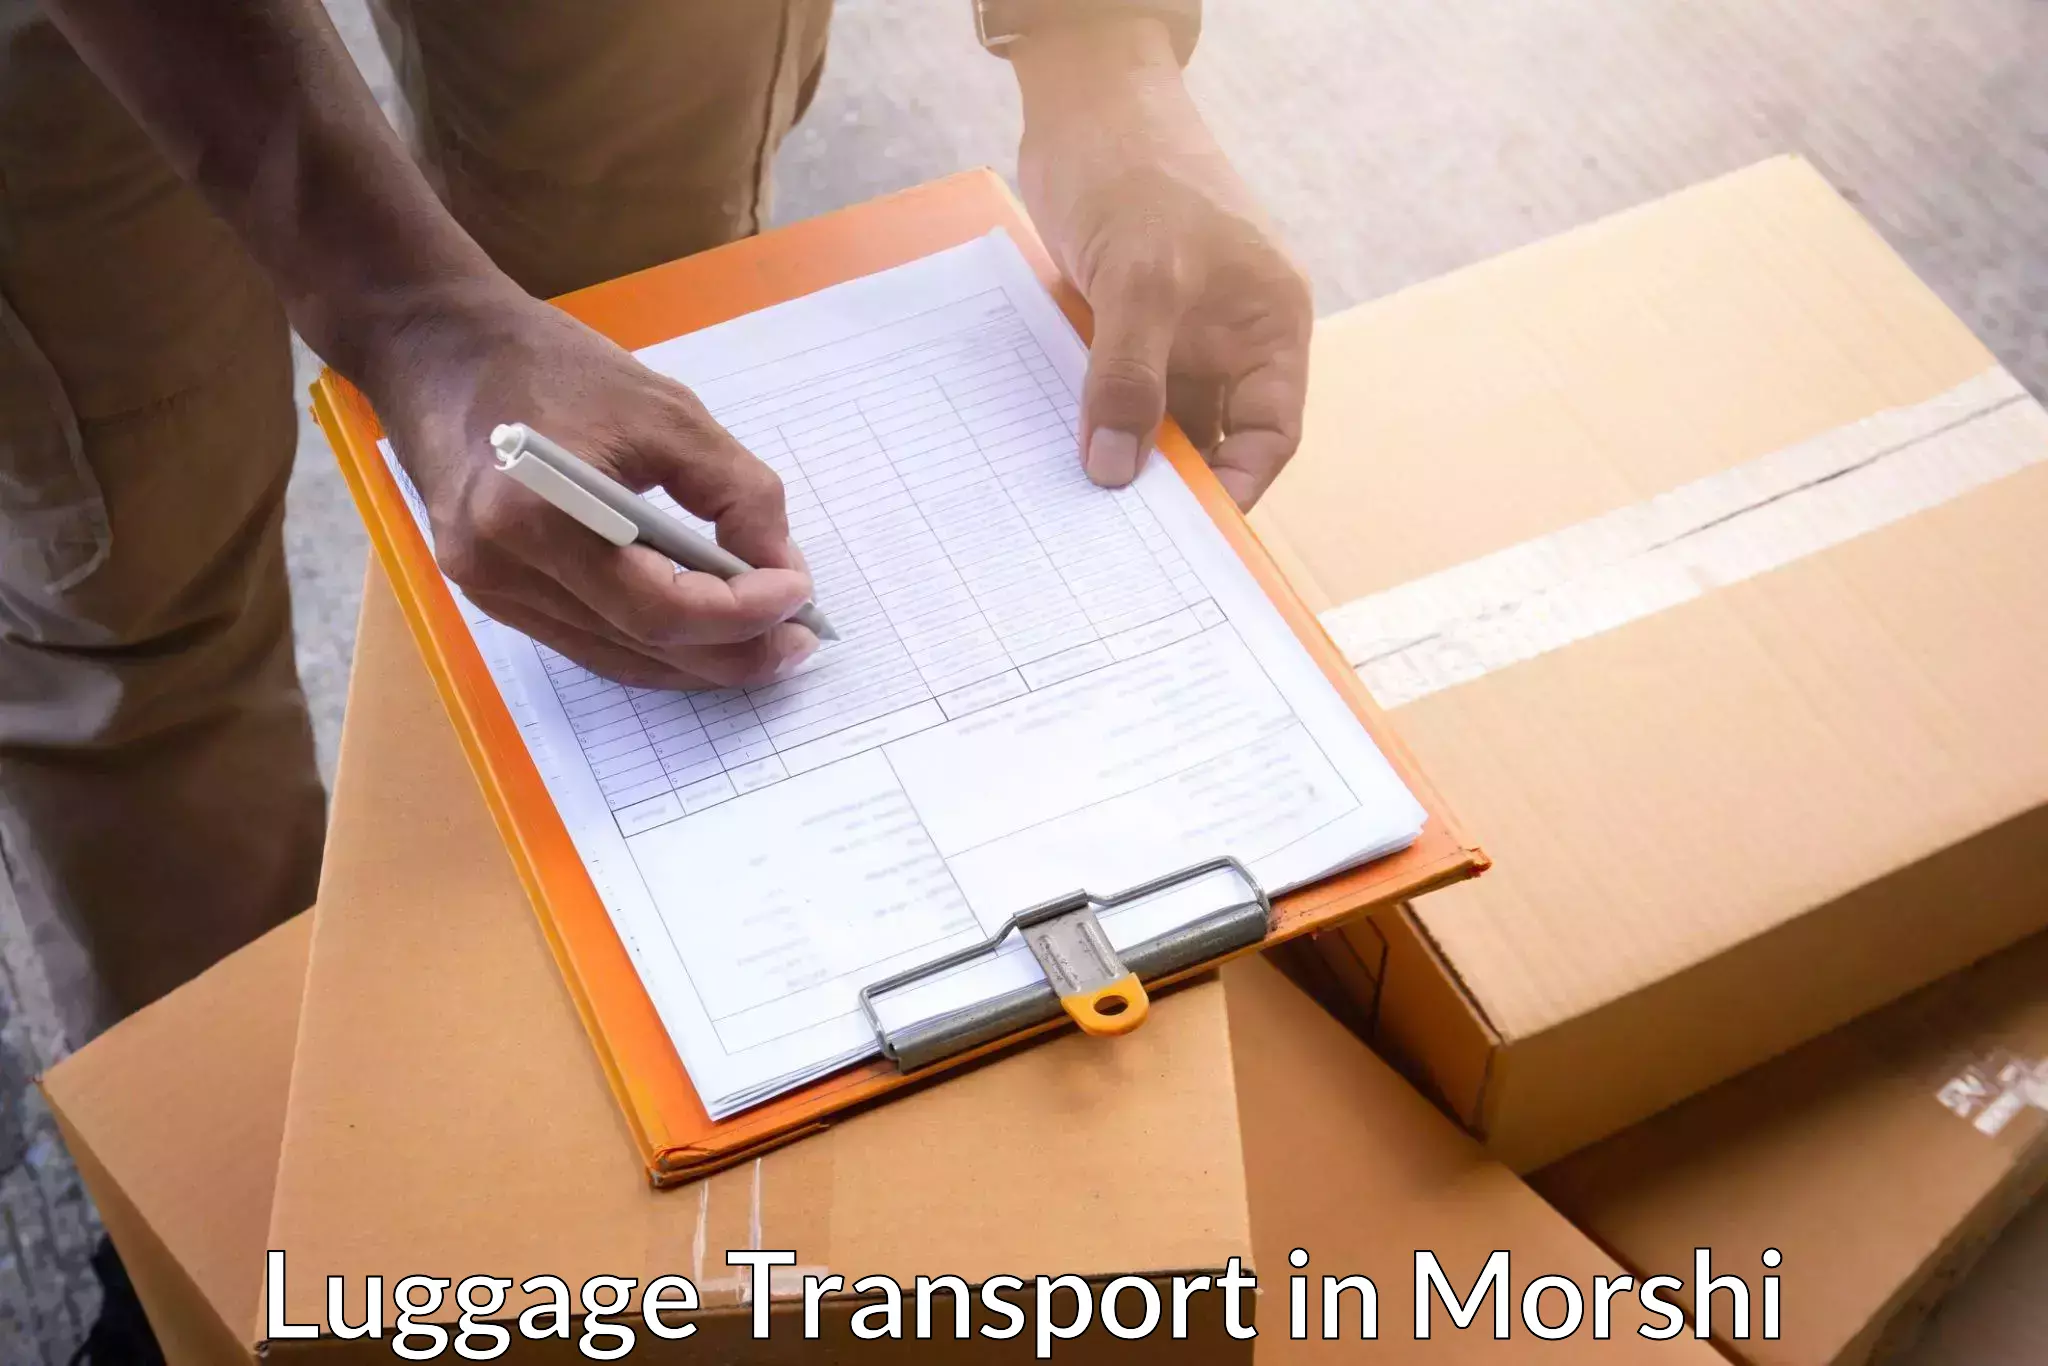 Luggage shipment tracking in Morshi